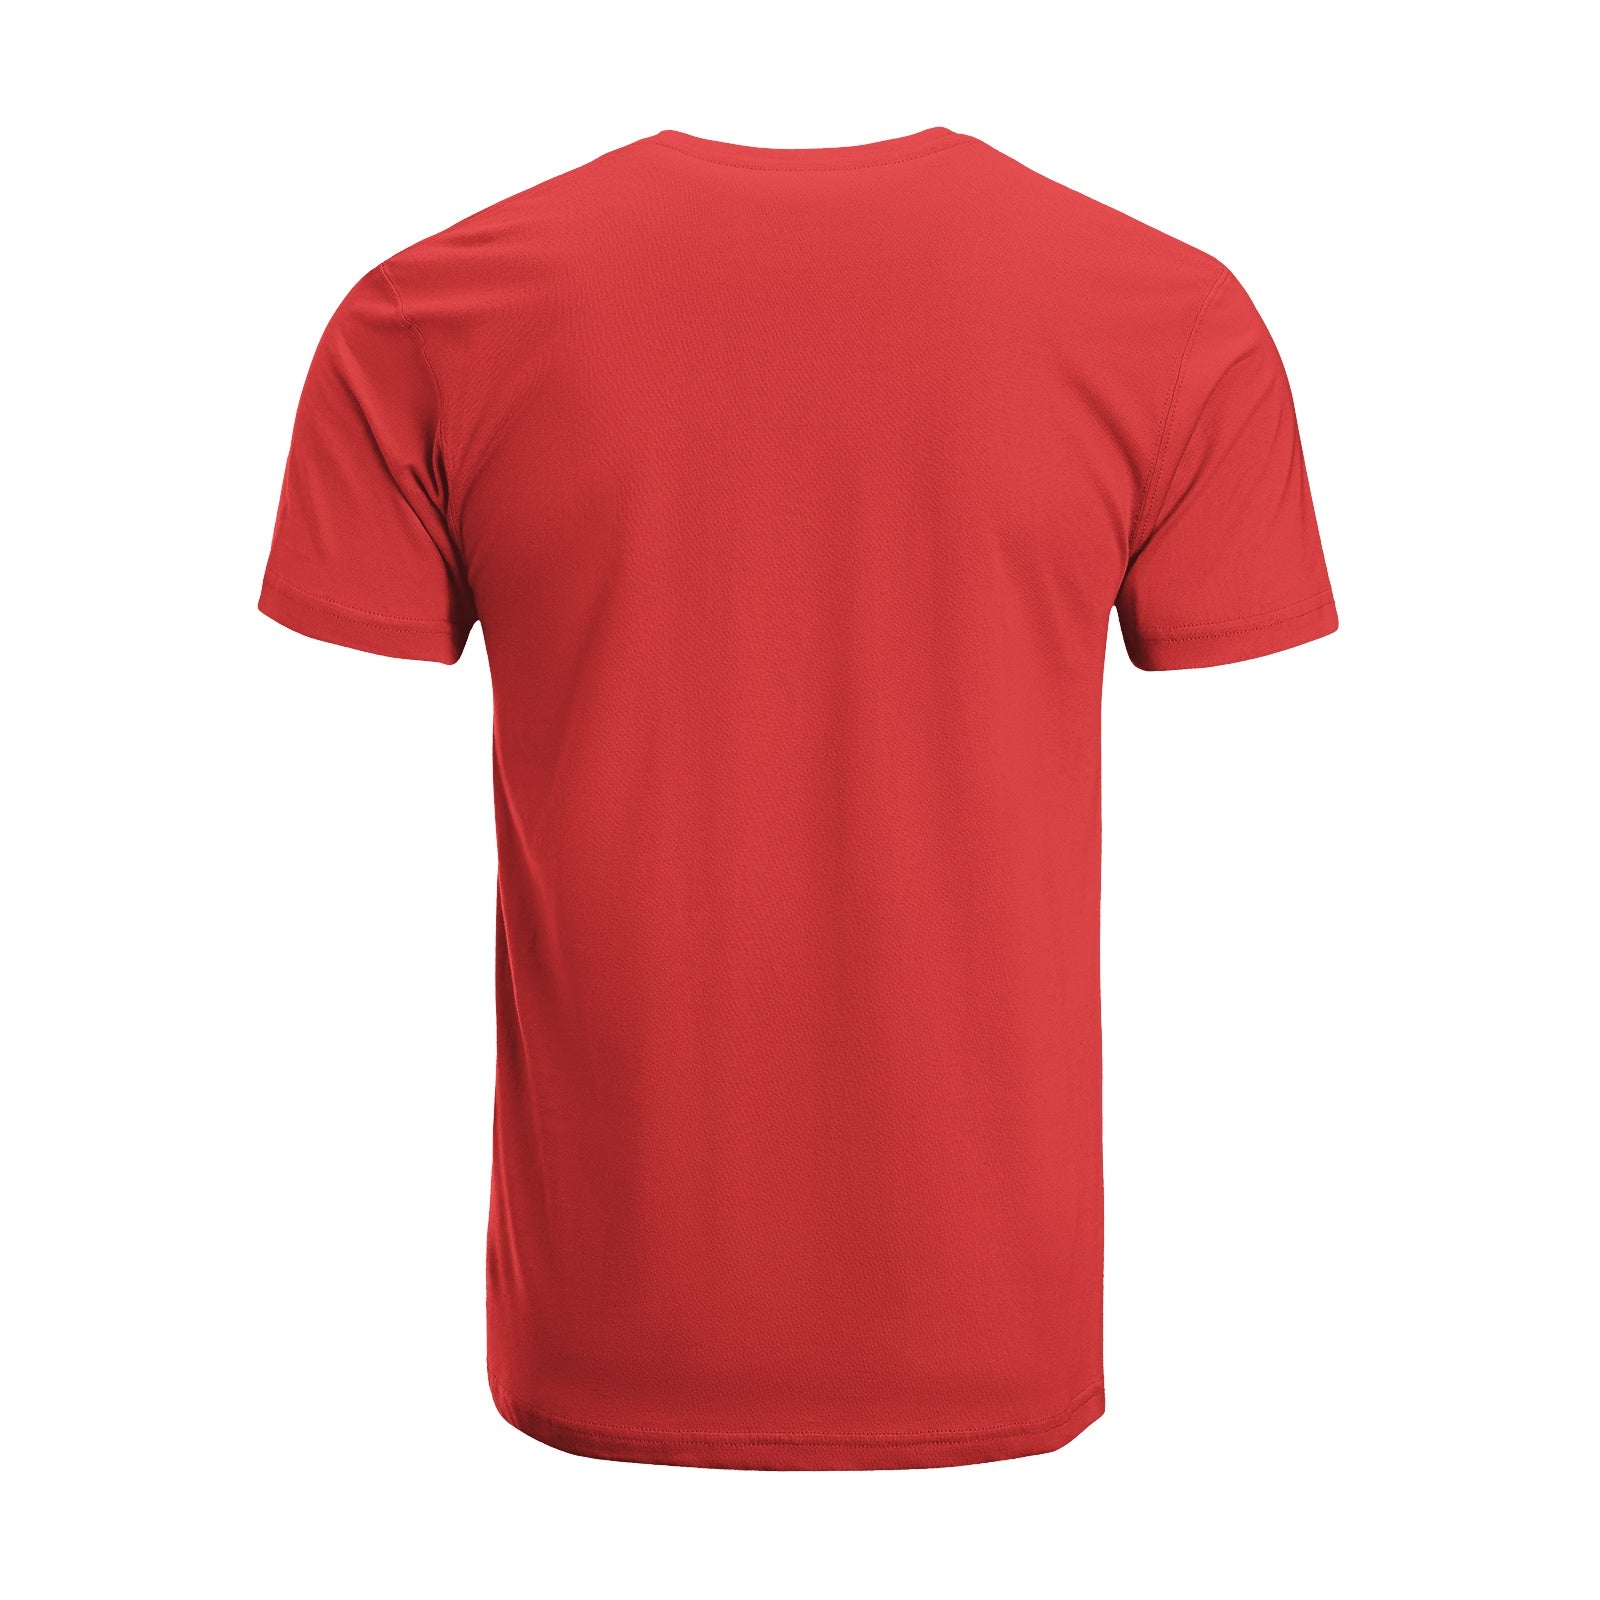 Unisex Short Sleeve Crew Neck Cotton Jersey T-Shirt Gym No. 48 - Tara-Outfits.com